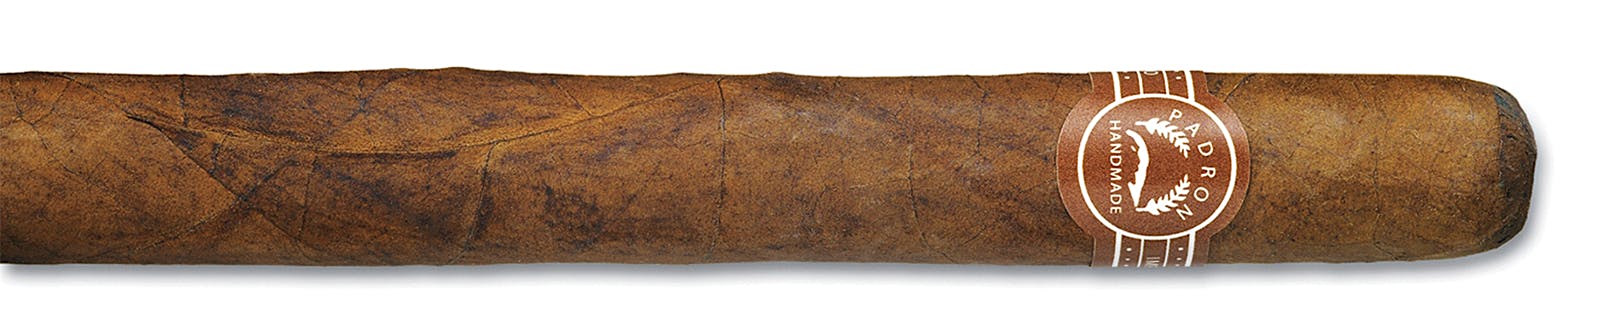 Padrón Magnum cigar